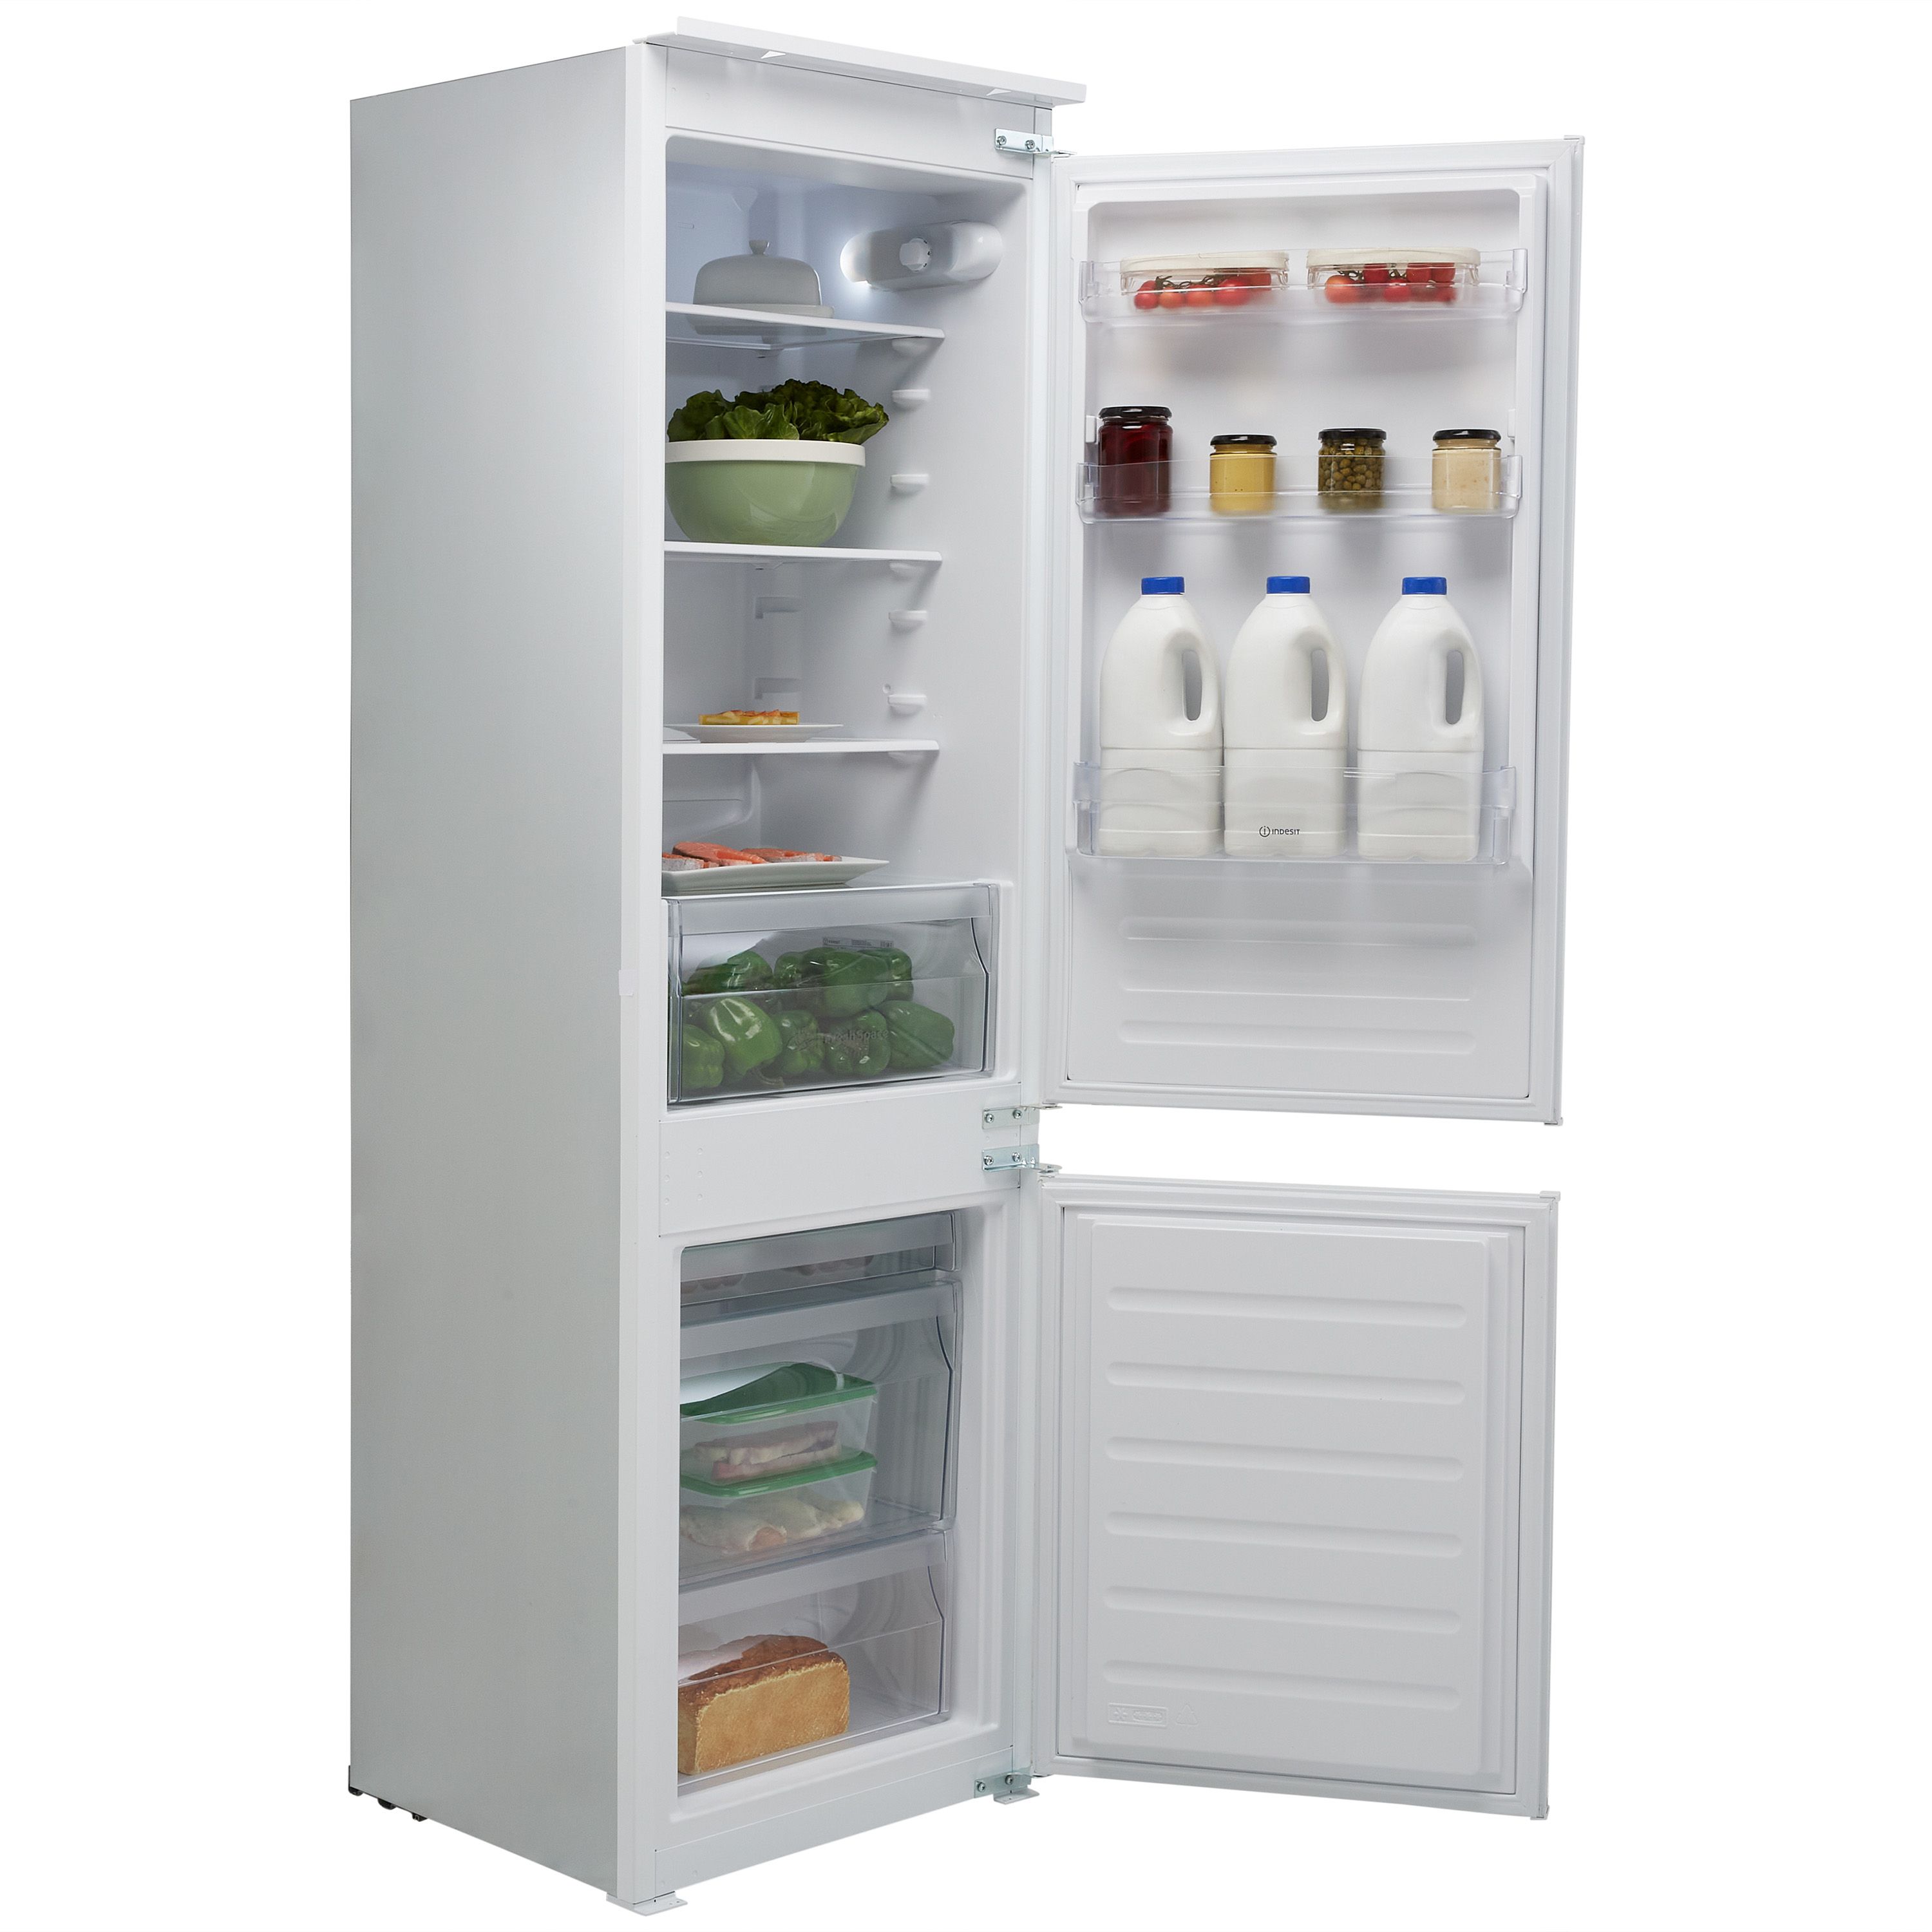 Indesit IB7030A1D.UK1_WH 70:30 Built-in Fridge freezer - White